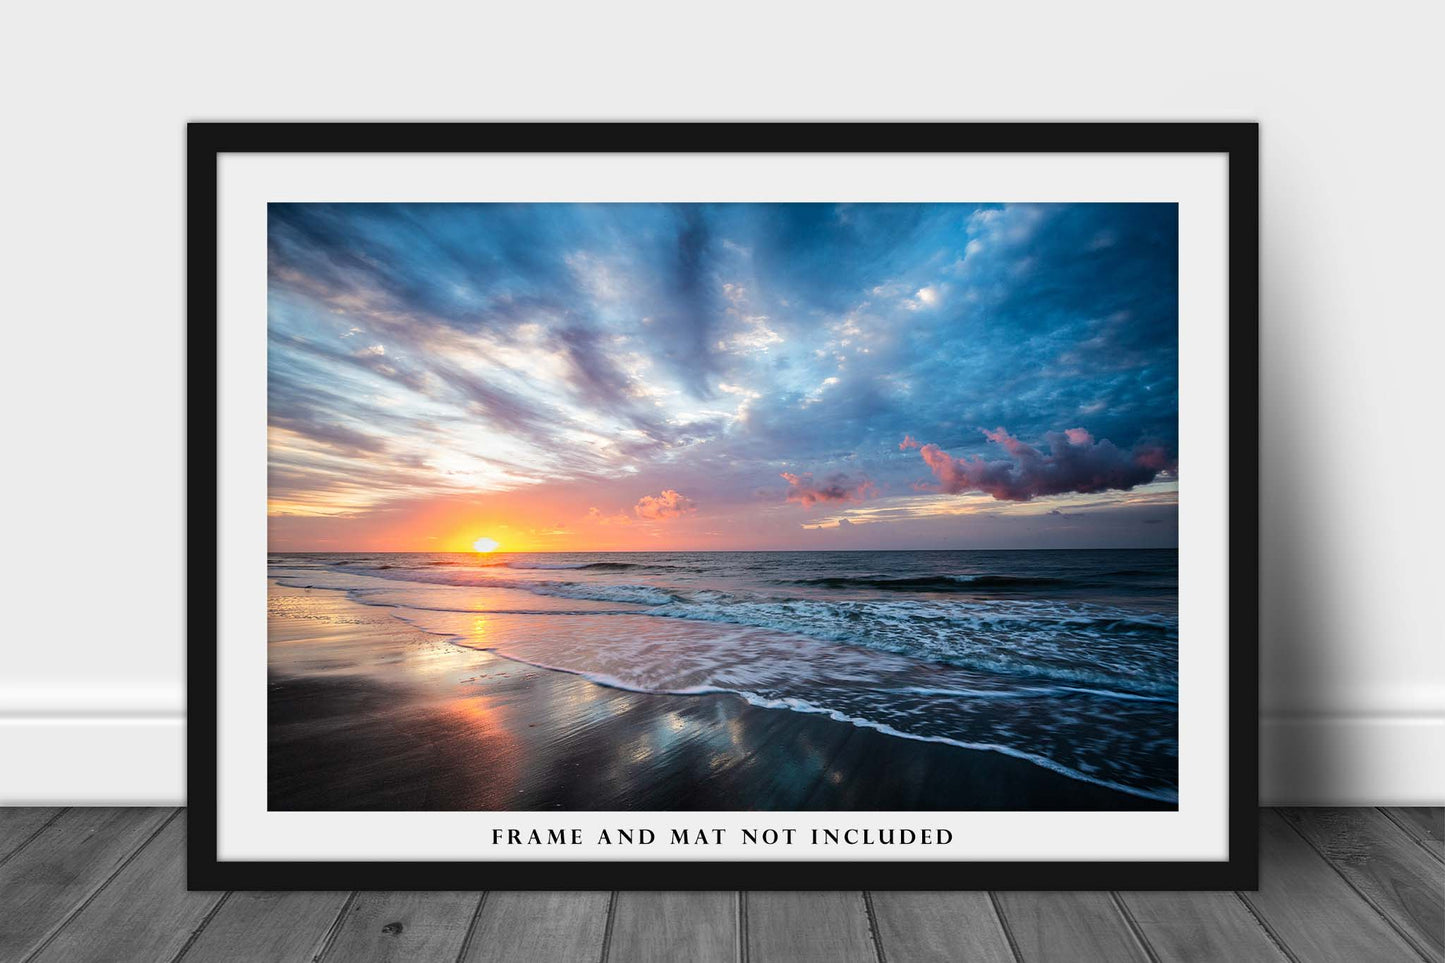 Coastal Photography Print (Not Framed) Picture of Scenic Sunrise Over Beach at Hilton Head Island South Carolina Ocean Wall Art Beach House Decor